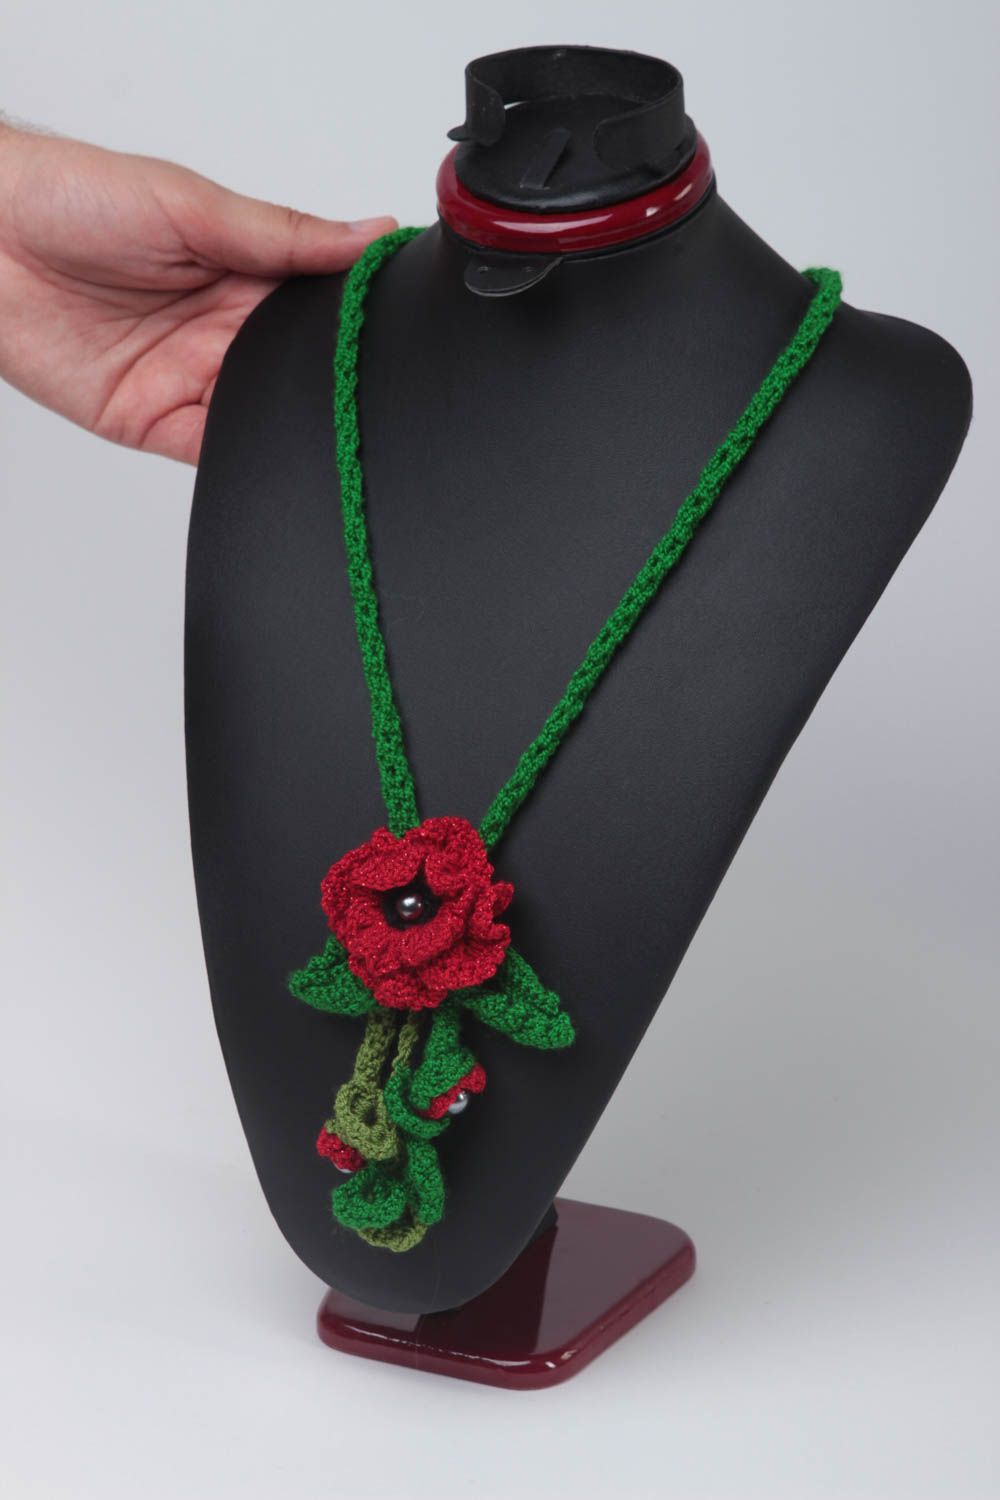 Handmade pendant designer pendant unusual pendant crochet jewelry gift ideas  photo 5